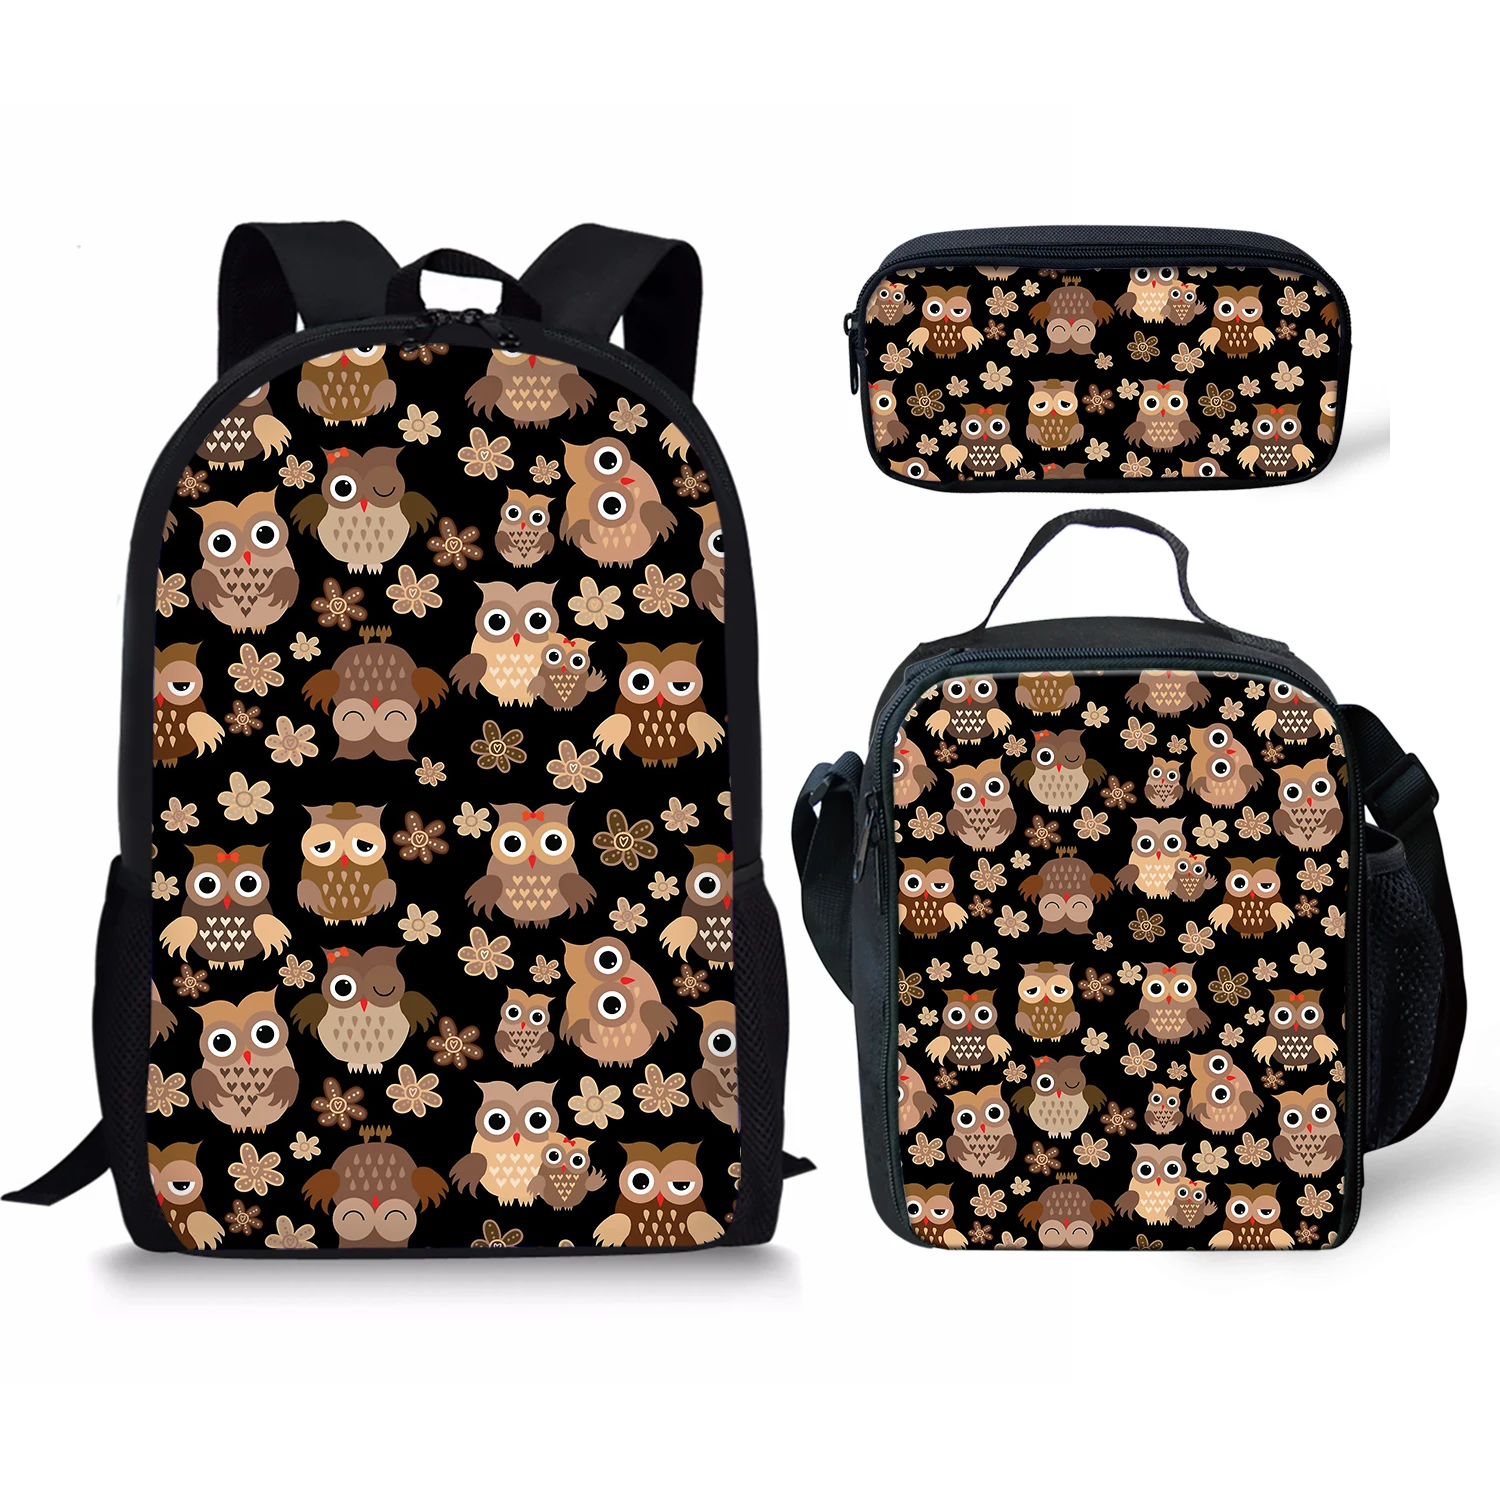 Cartoon Owl Pattern Girls School Bag Set Large Capacity Students Backpacks 3pcs Pencil Lunch Children Mochila Free Shipping